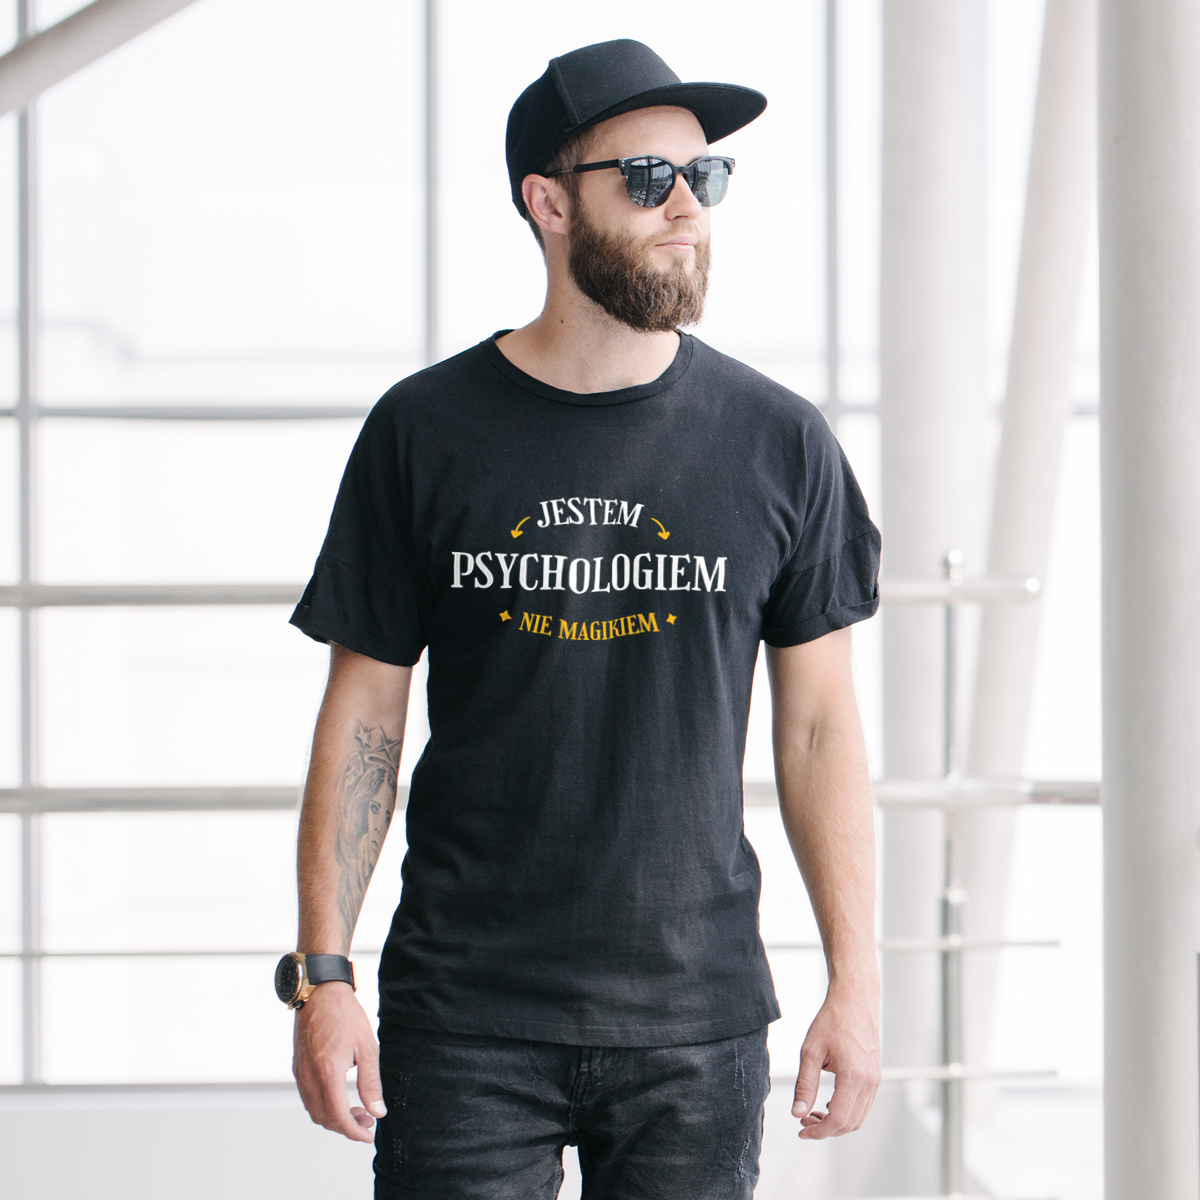 Jestem Psychologiem Nie Magikiem - Męska Koszulka Czarna